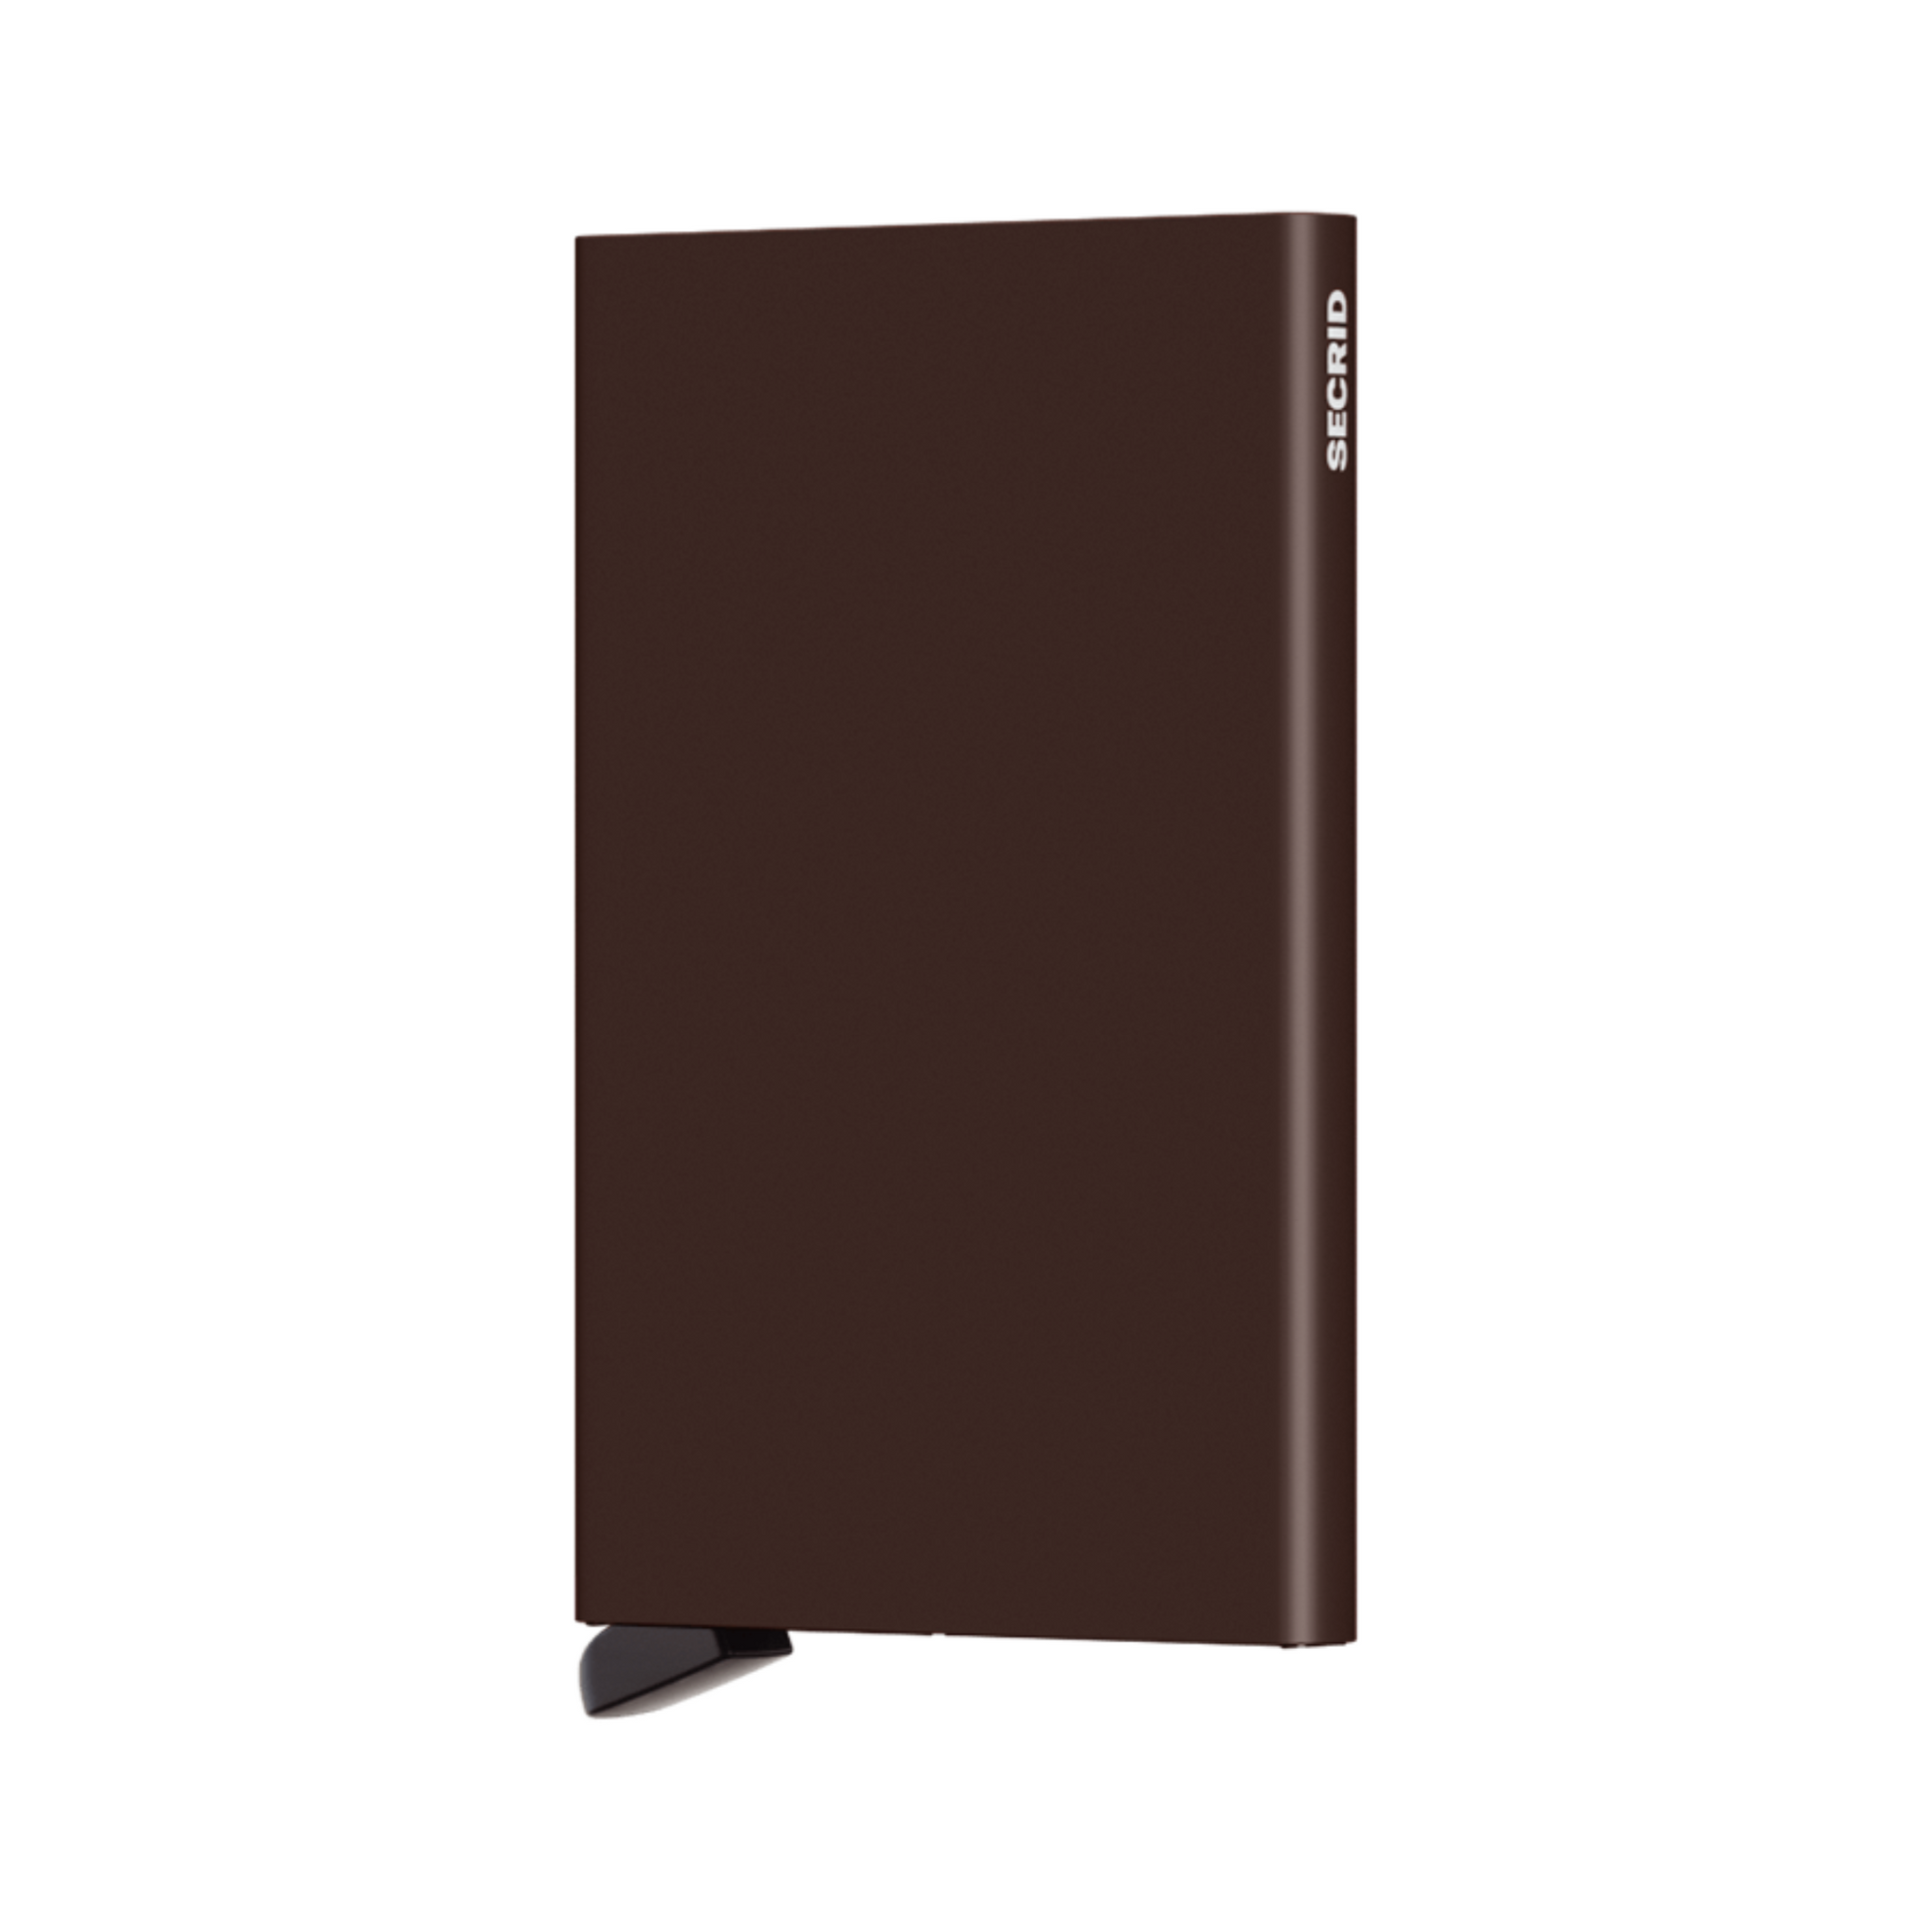 Metallic dark brown rectangular wallet with black bottom tab and small white logo on side.